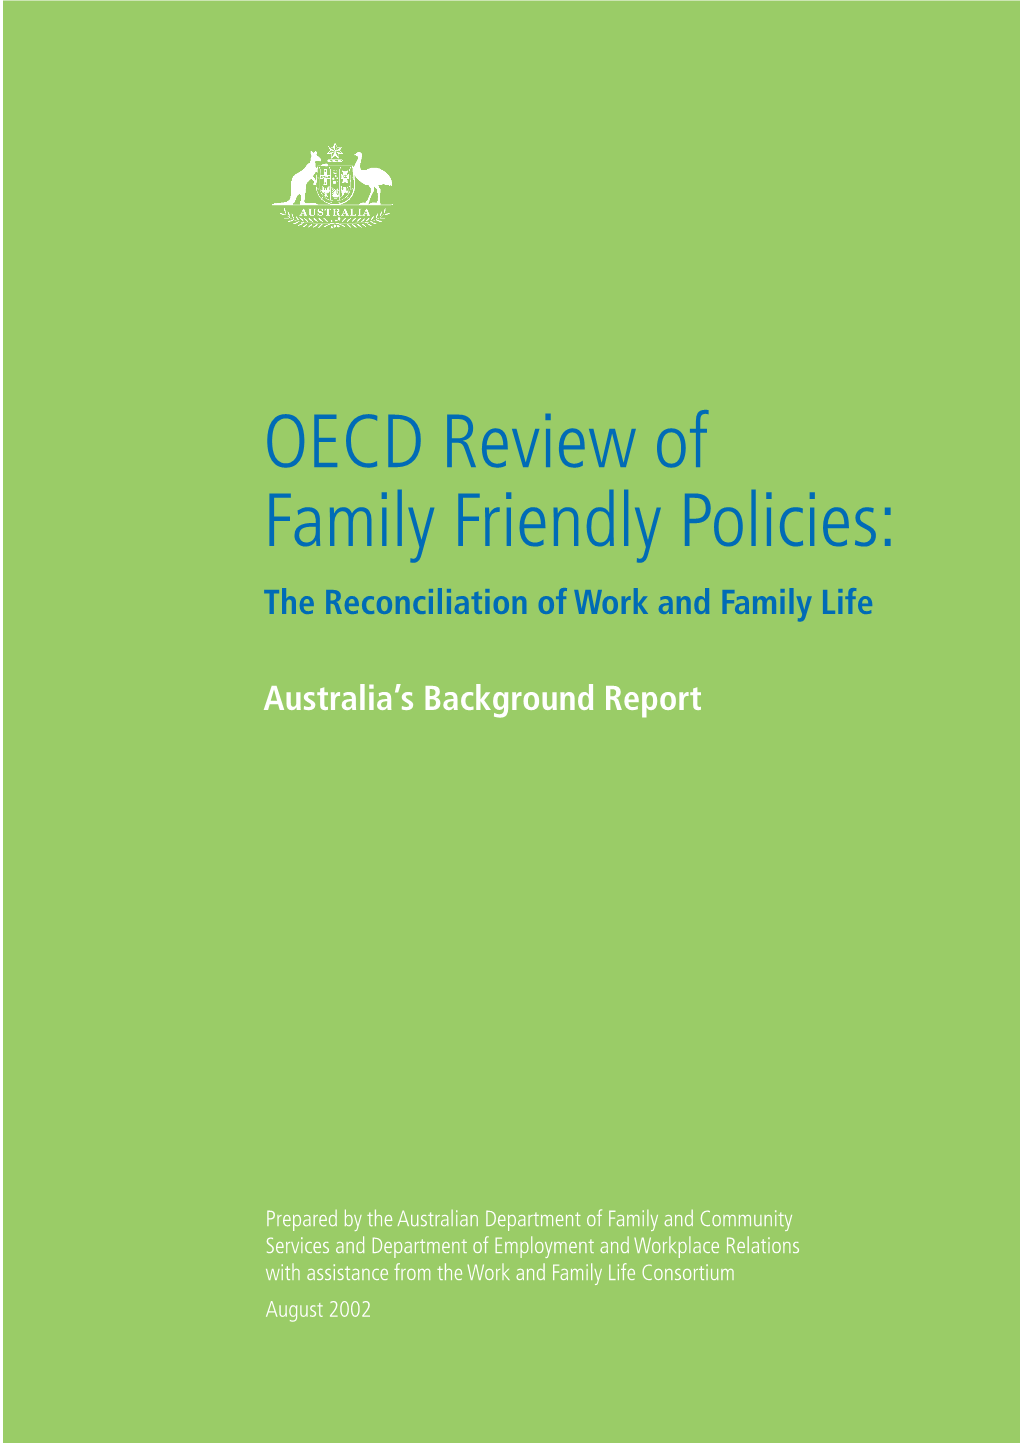 OECD Report 7/8 11Am